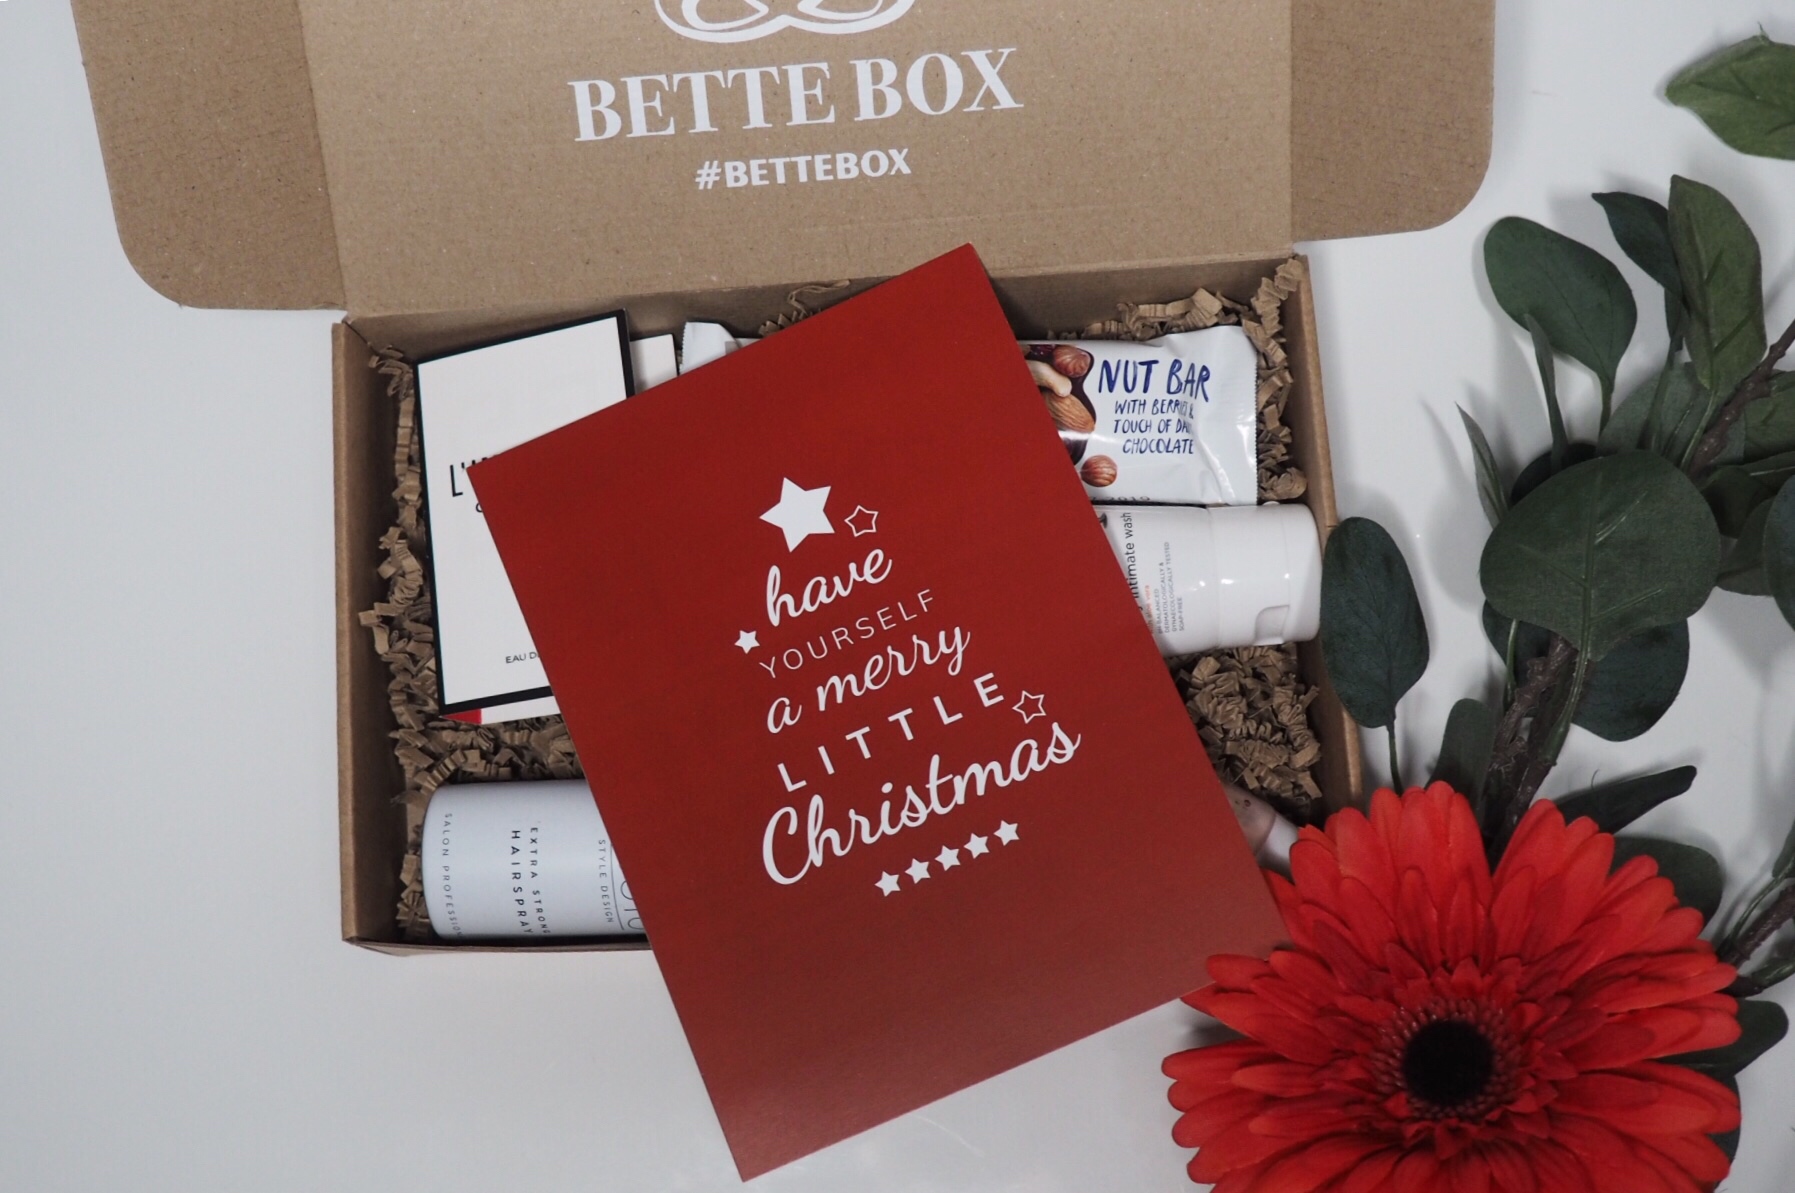 Bette Box joulukuu